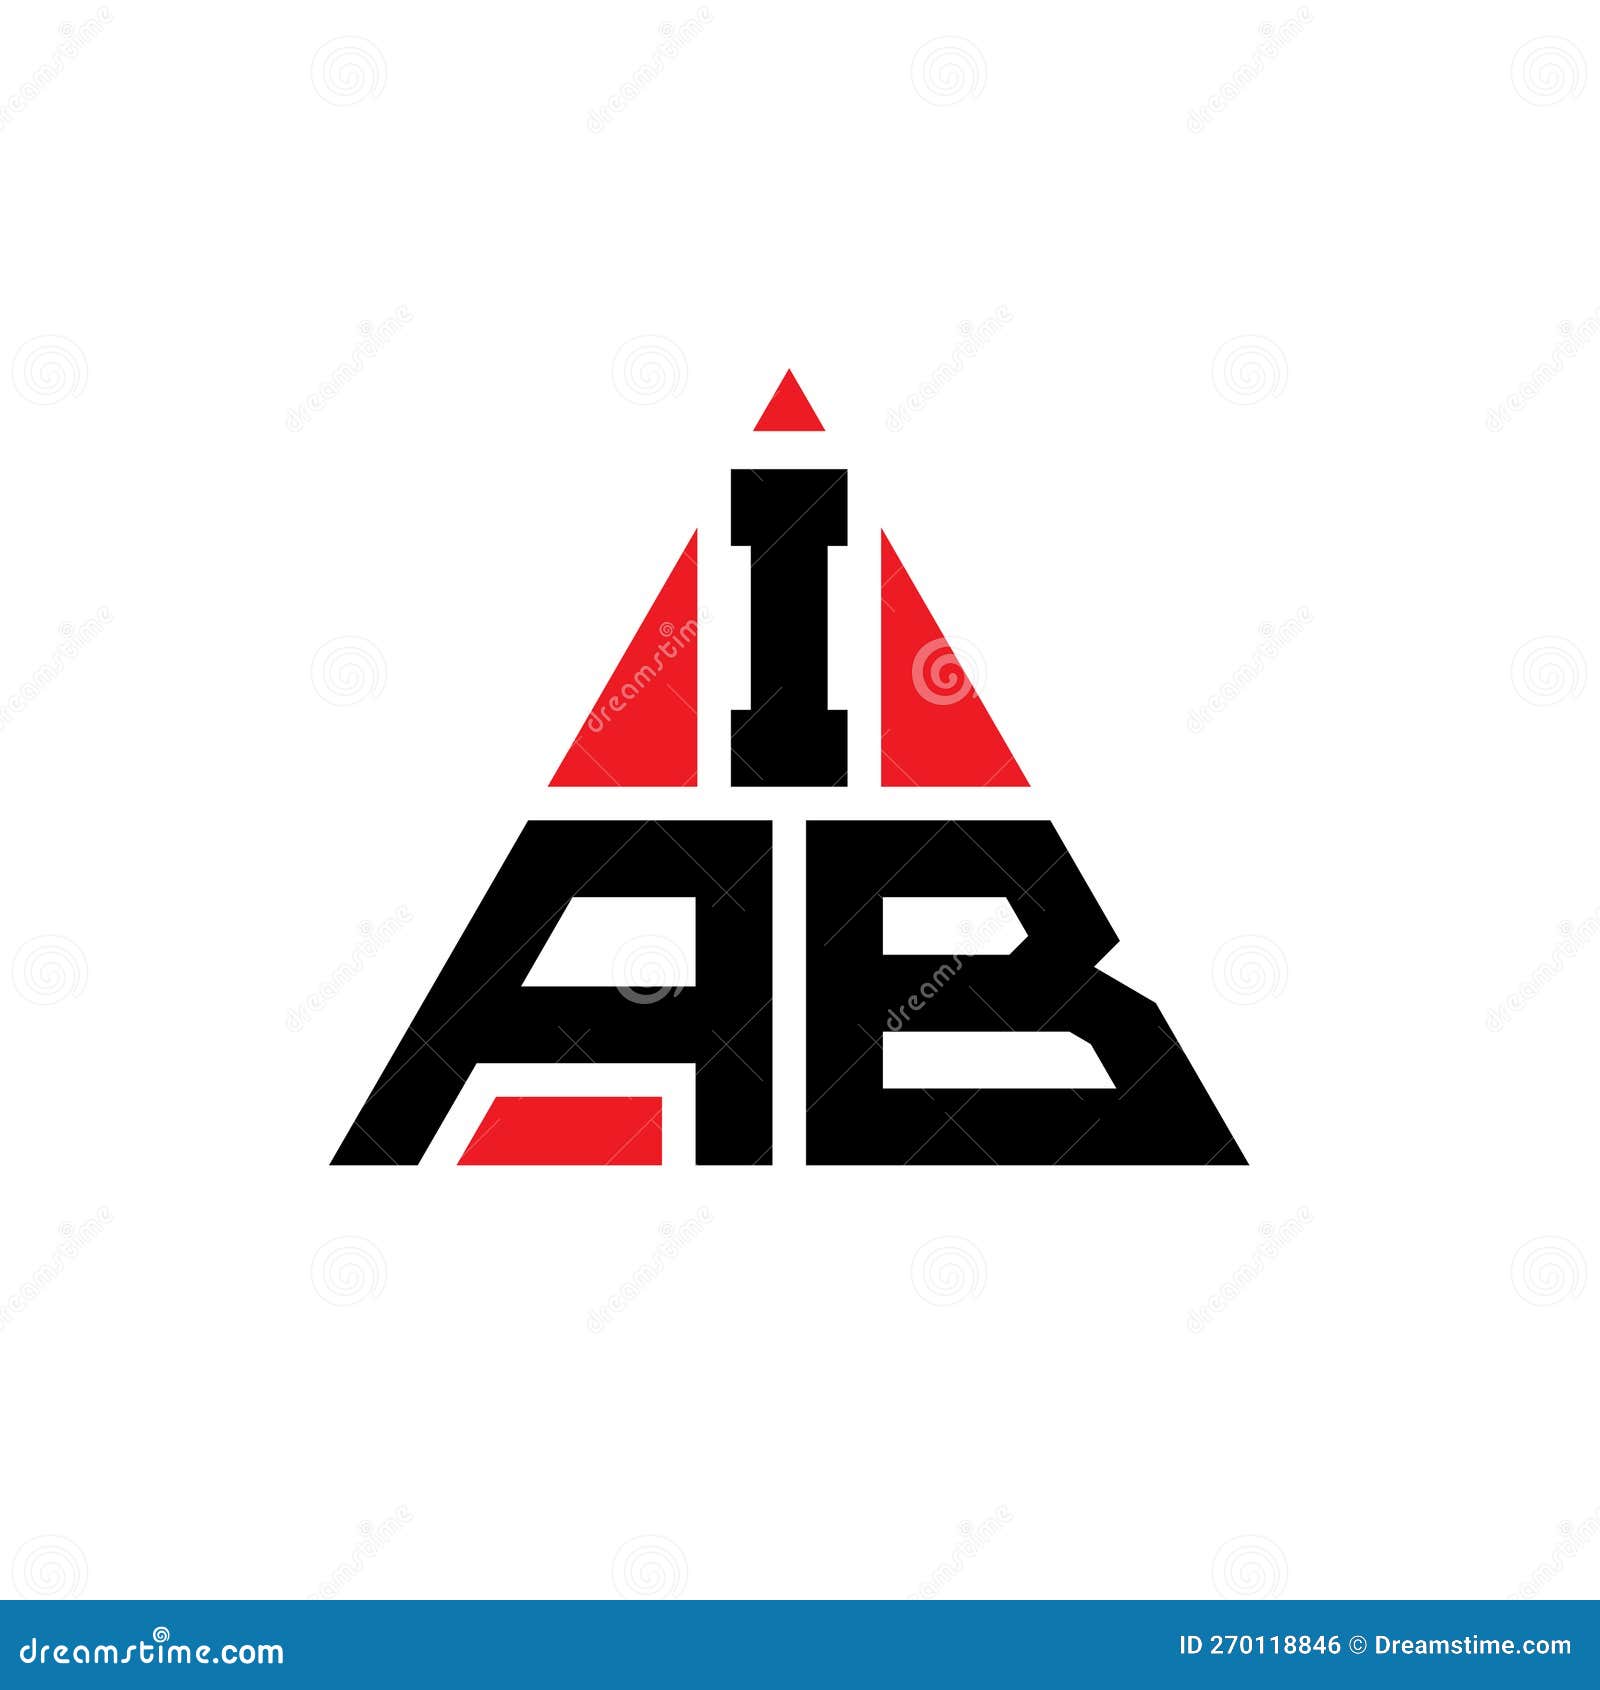 iab triangle letter logo  with triangle . iab triangle logo  monogram. iab triangle  logo template with red